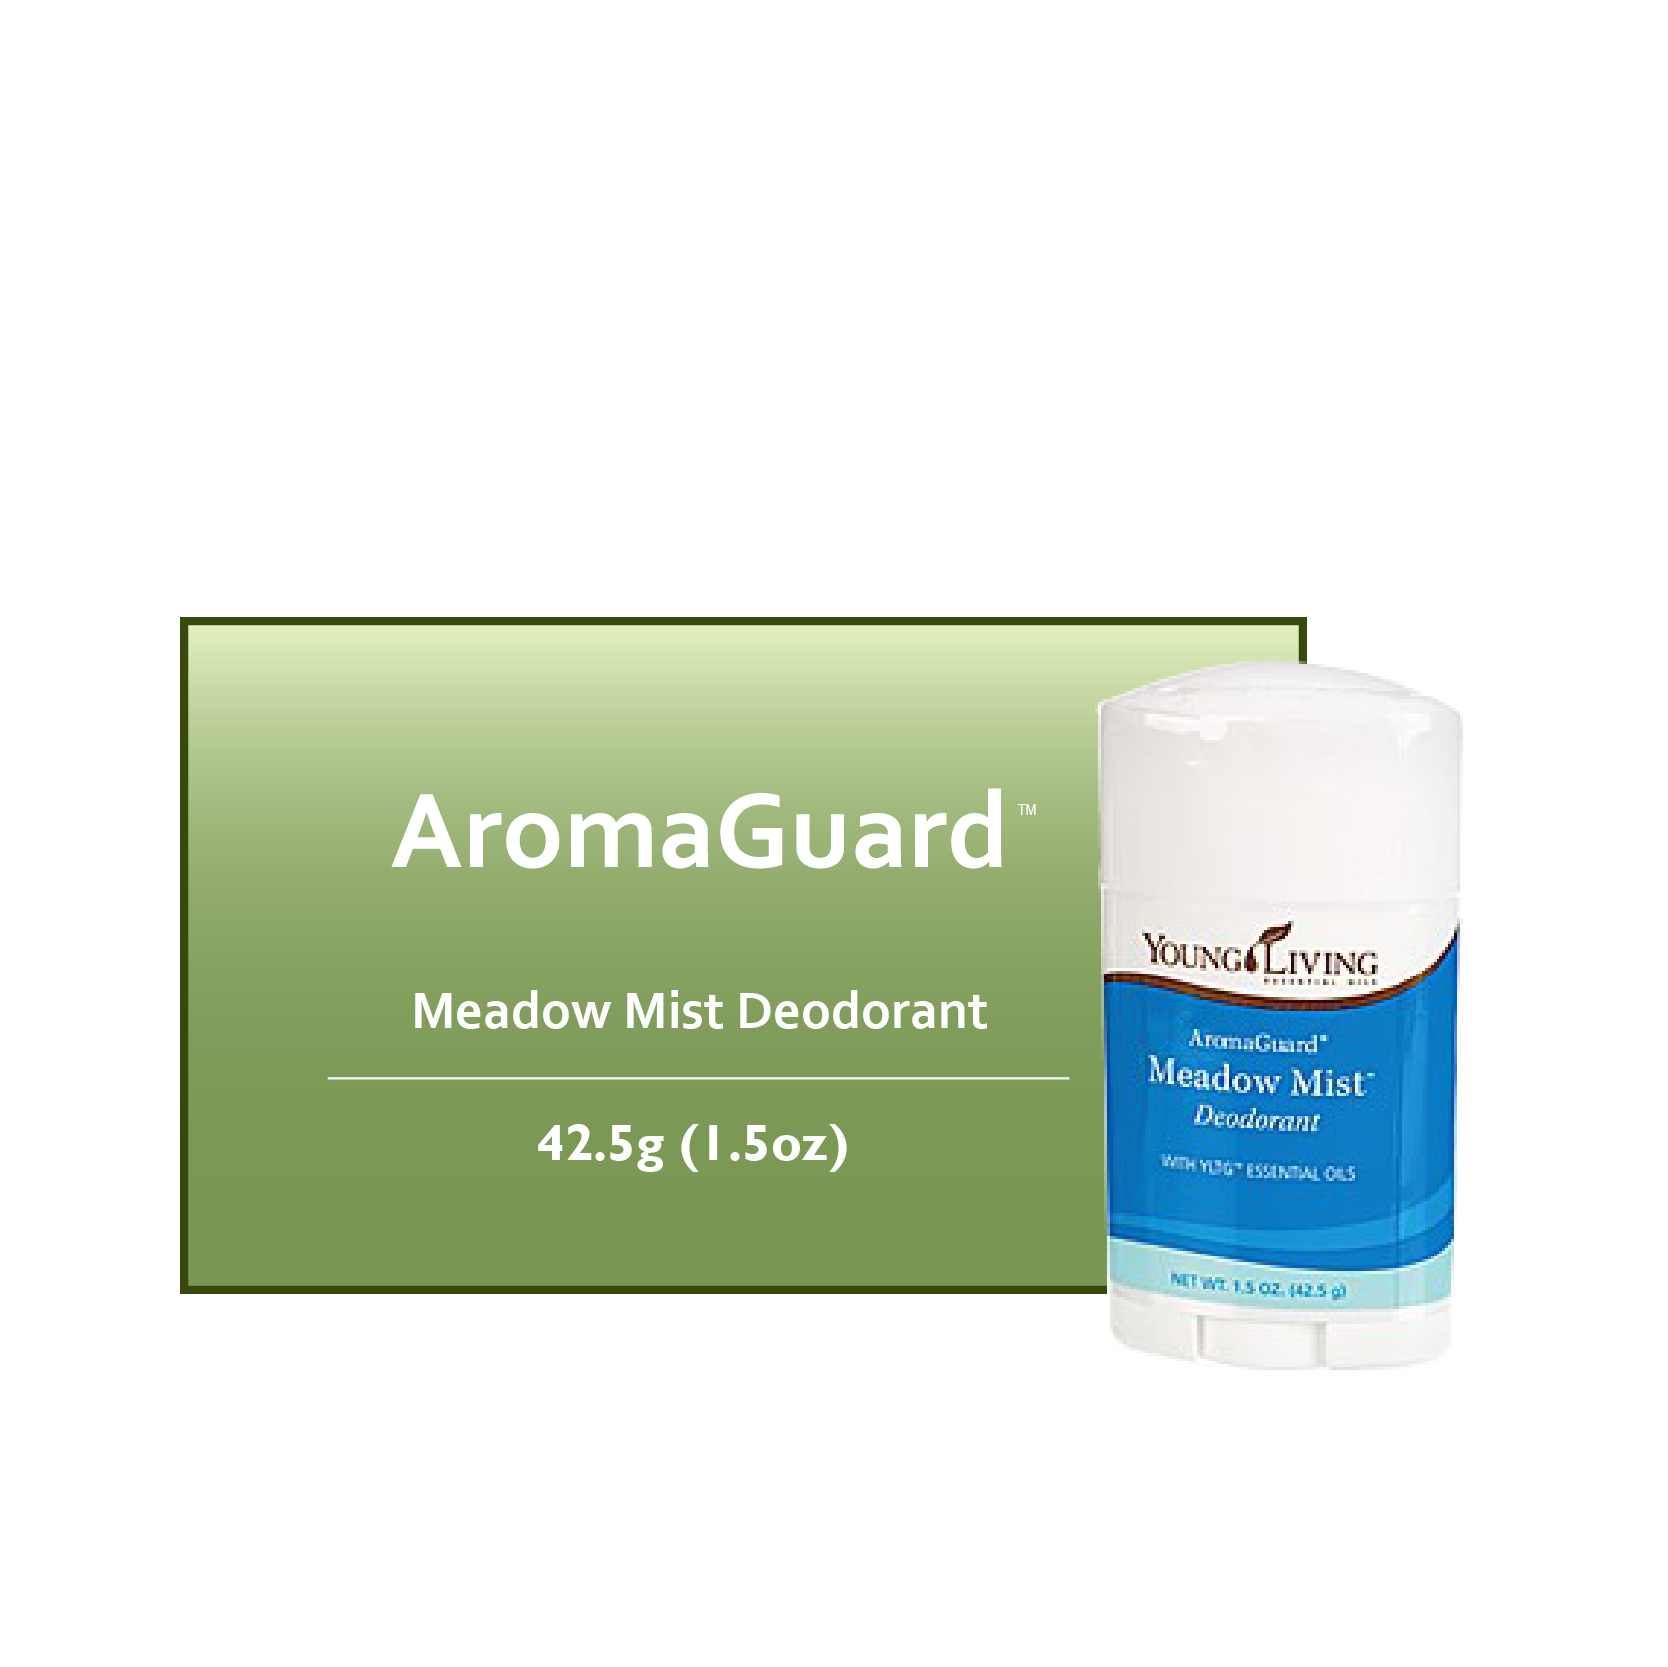 YL AromaGuard Meadow Mist Deodorant